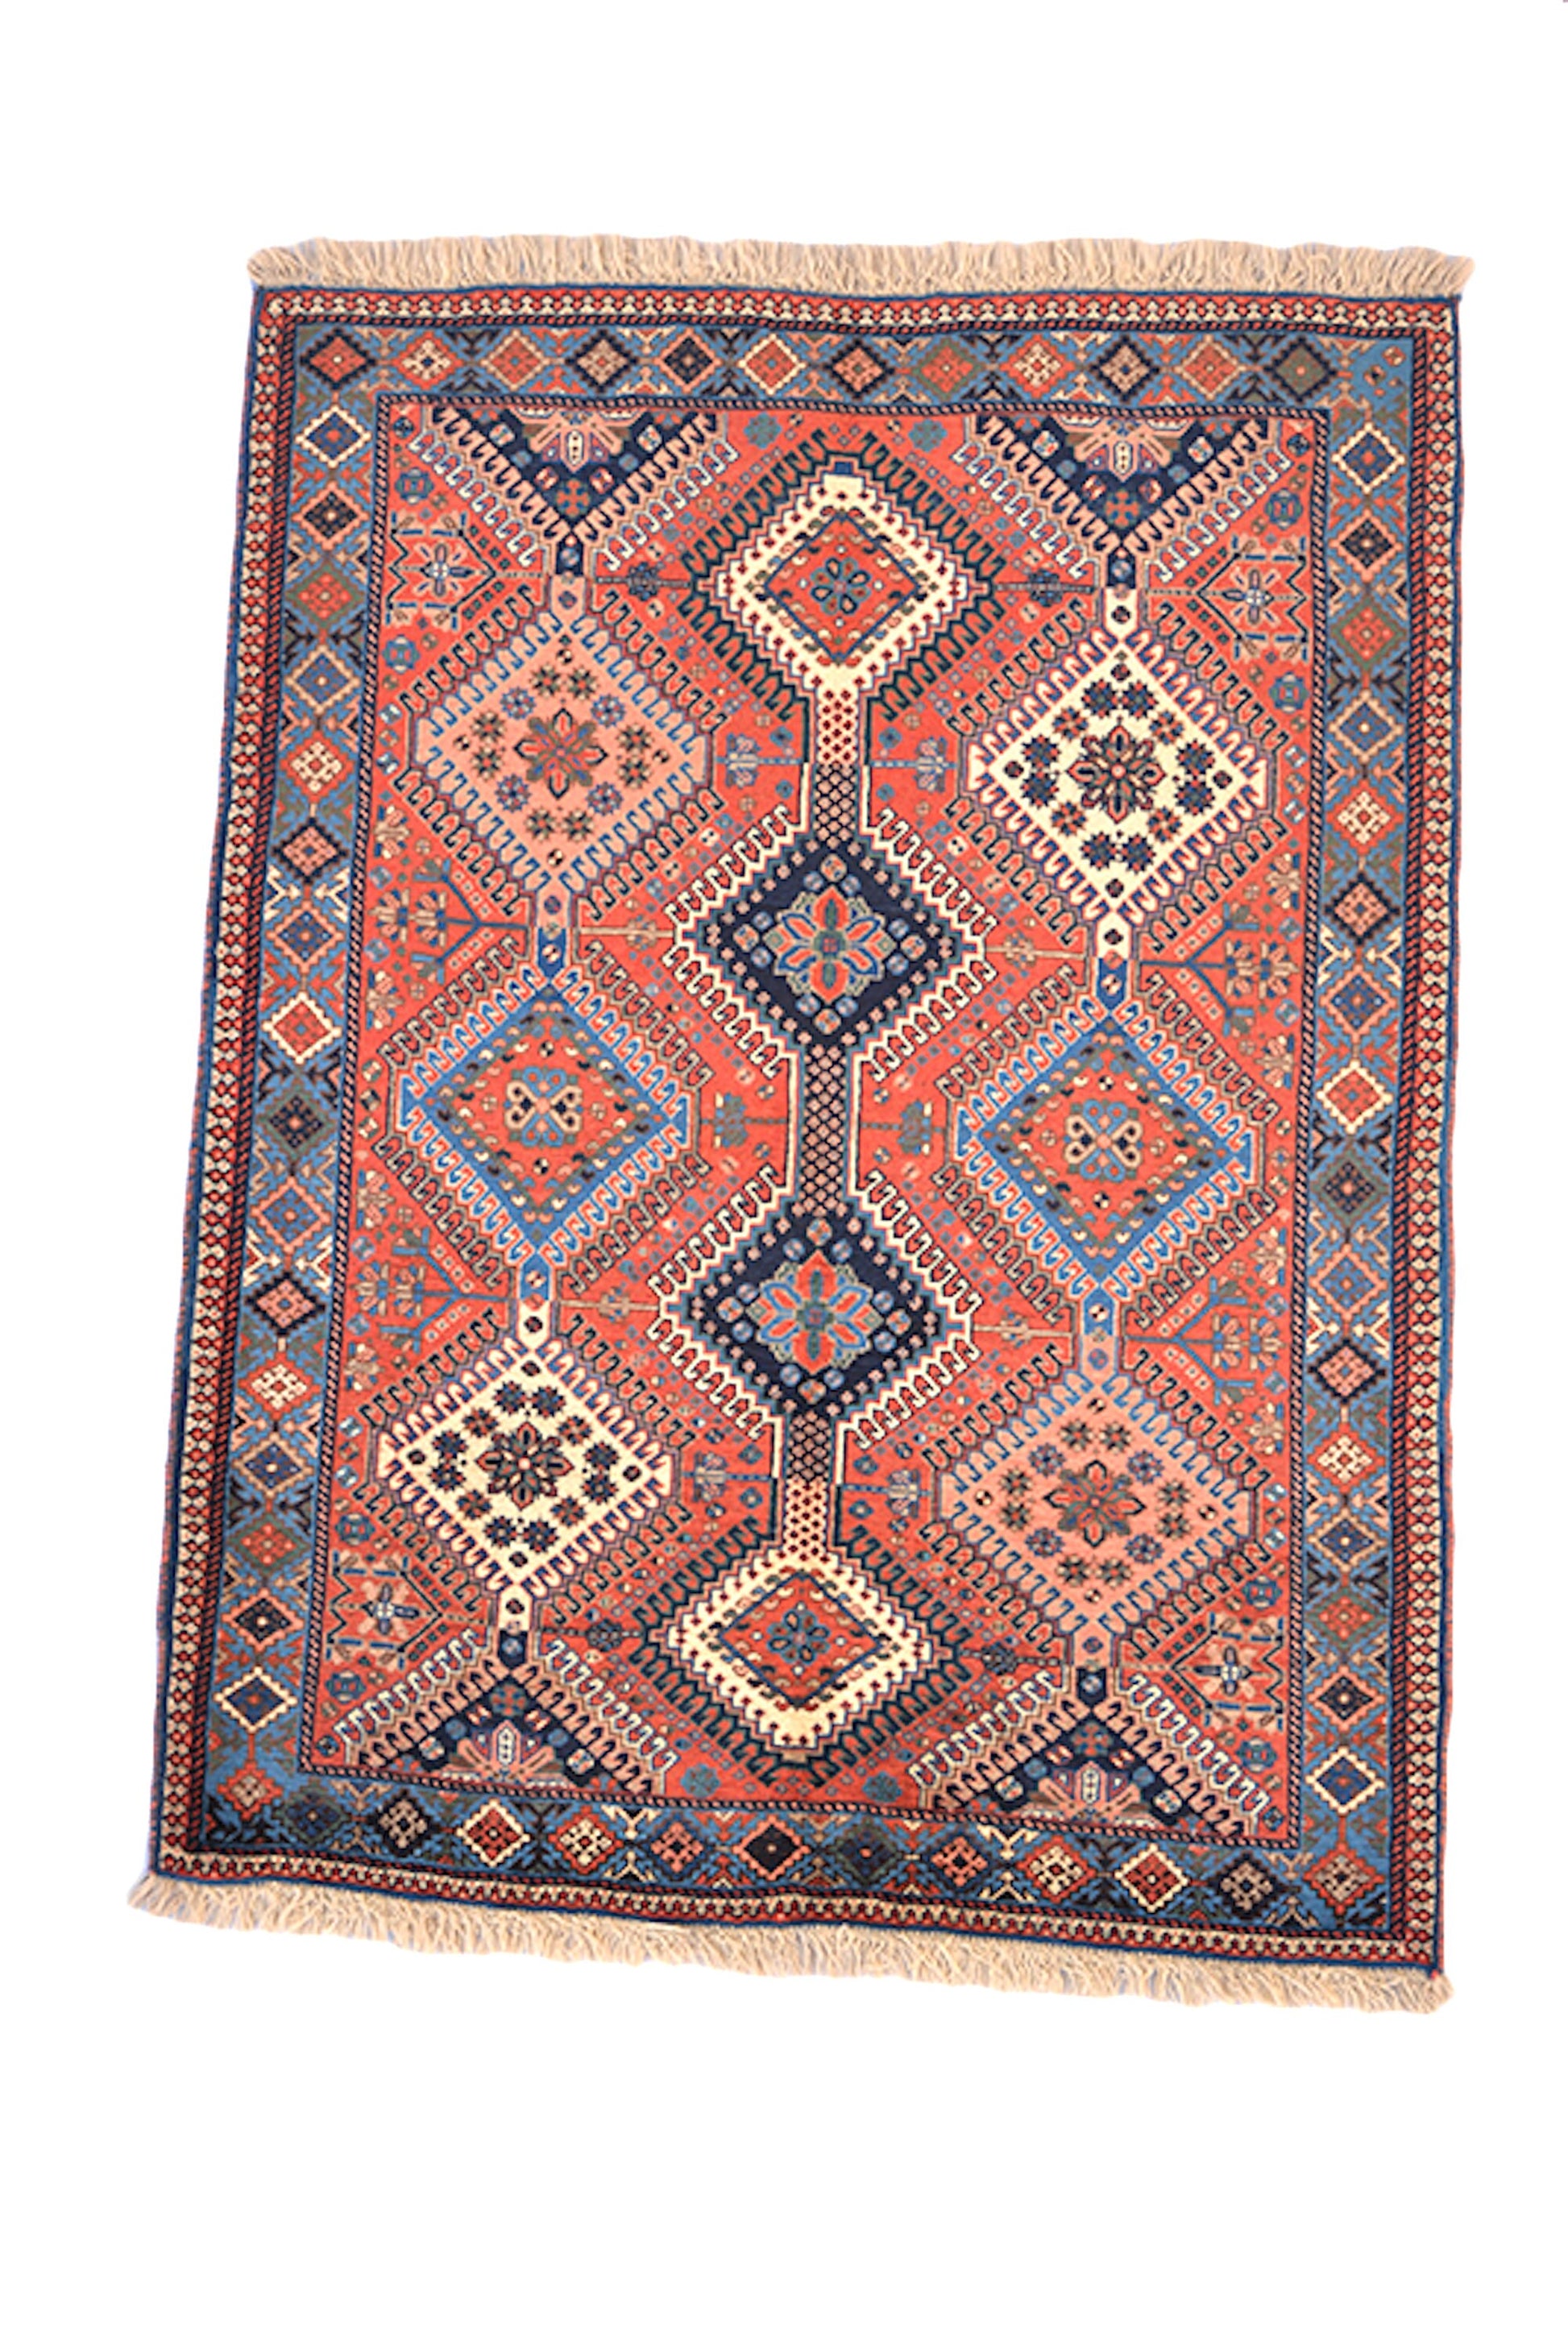 3 x 5 Orange Blue Turkish Tribal Rug | Hand Woven with Diamond Shaped Geometric Pattern | Accent Rustic Home Decor Rug